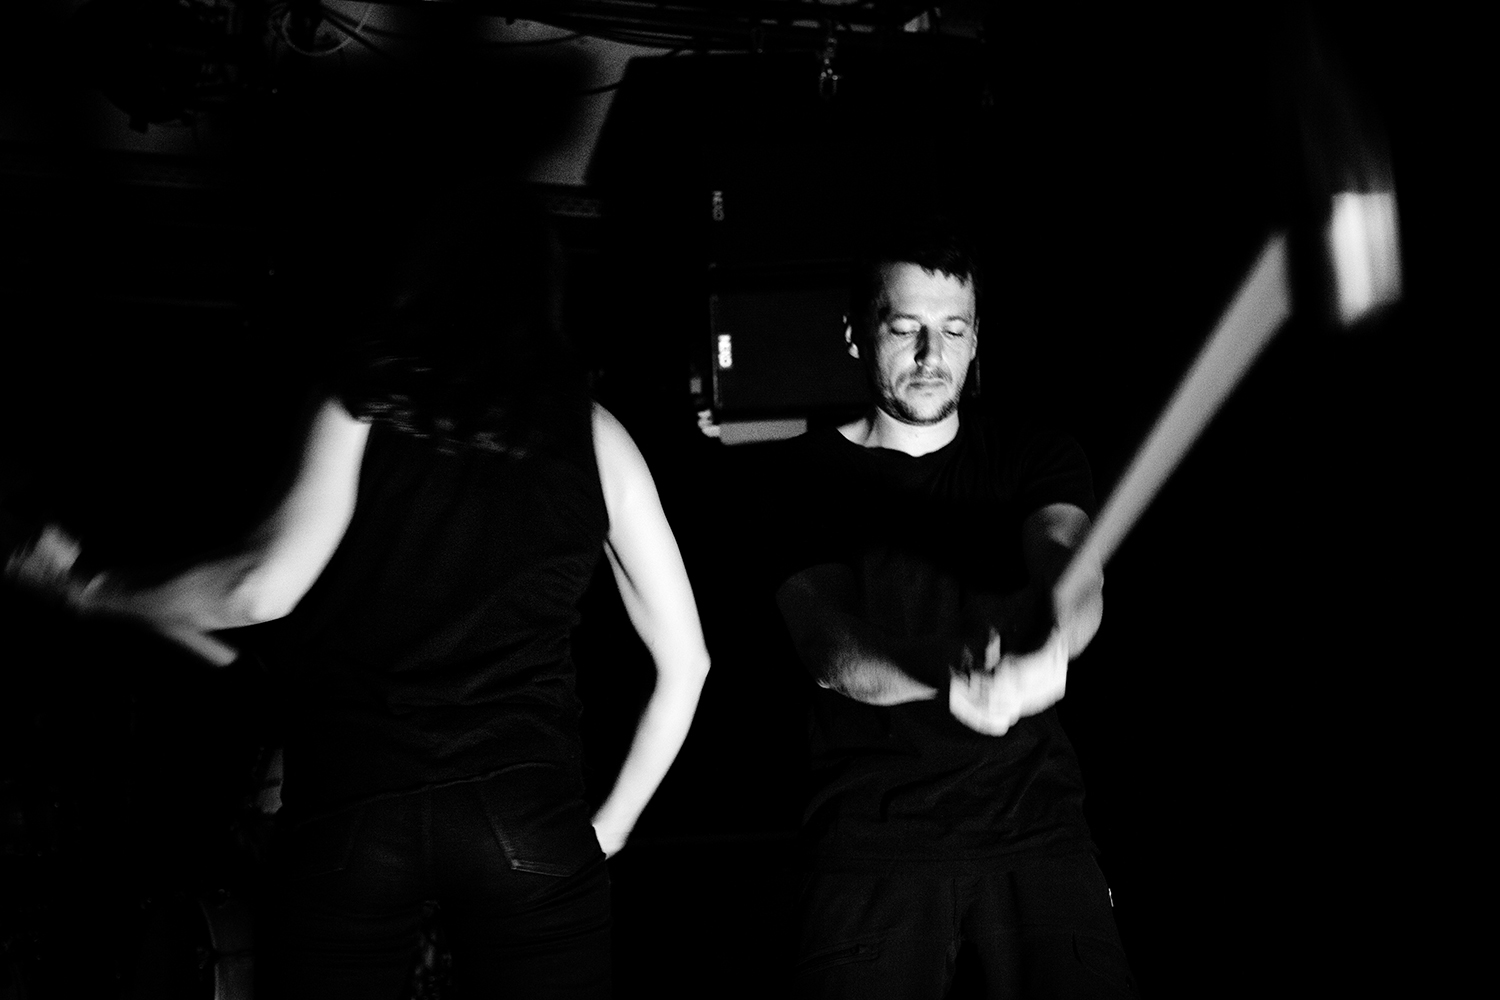 Inga Huld Hákonardóttir & Yann Leguay - Performance - Les Ateliers Claus - Brussels, Belgium